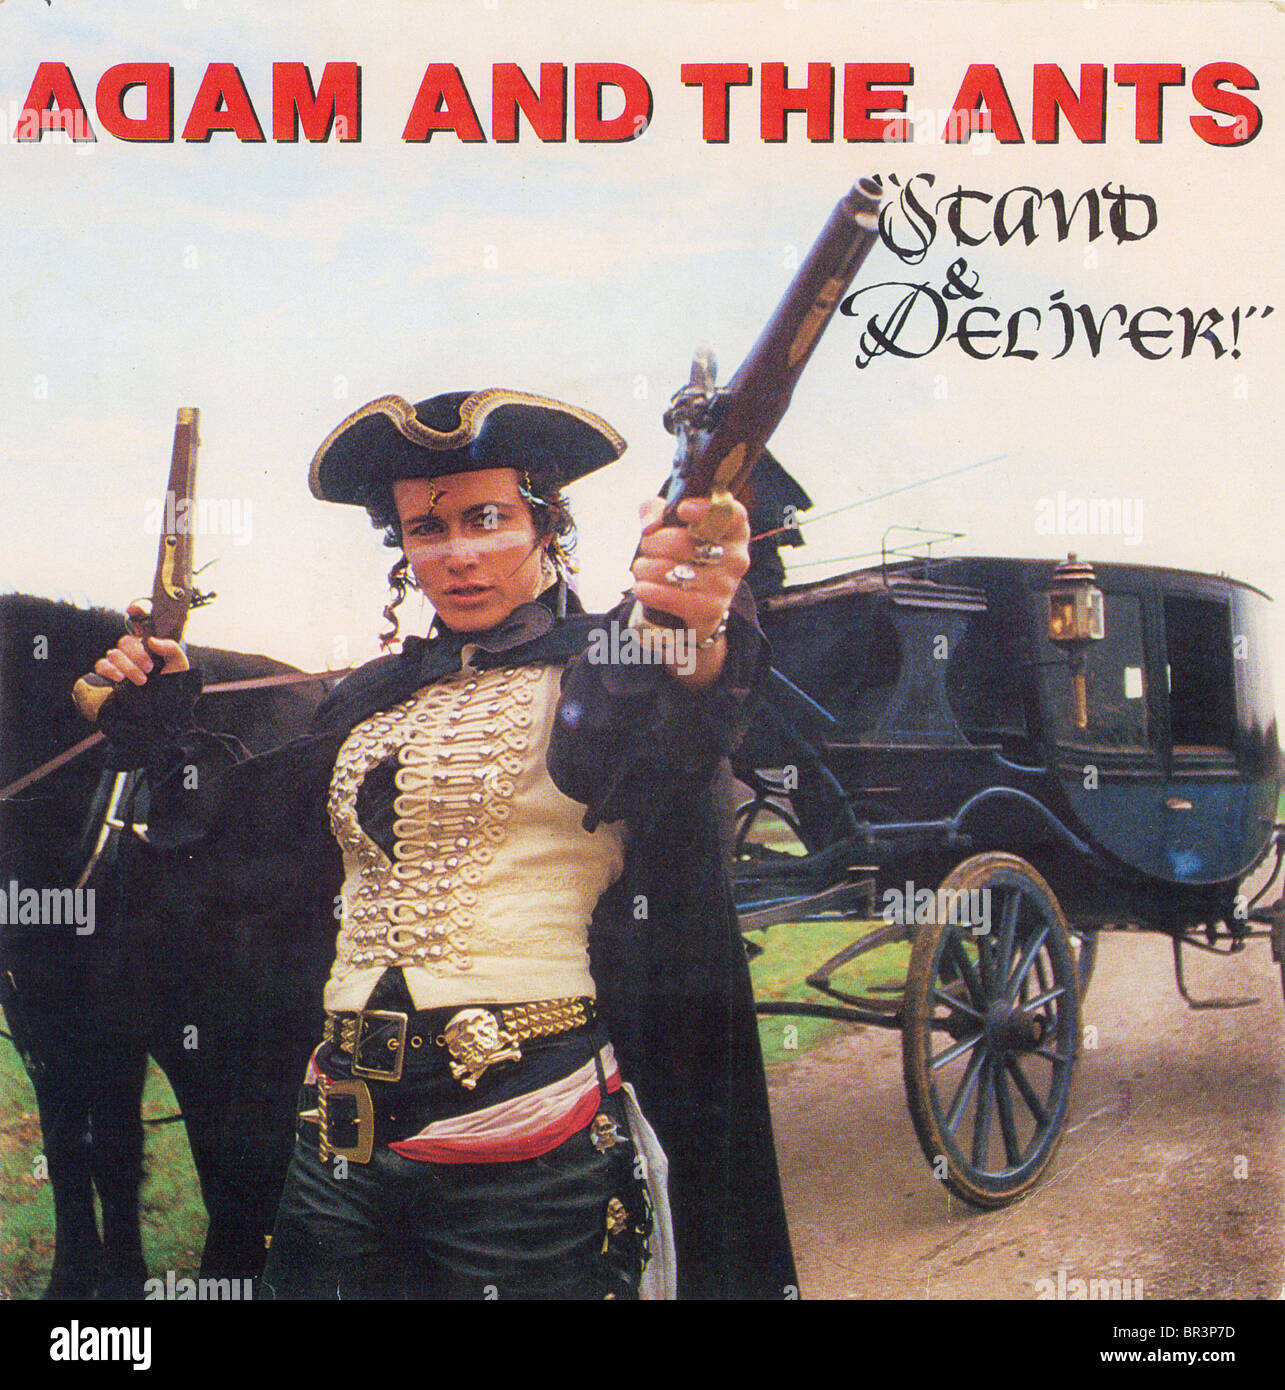 ADAM AND THE ANTS - 1981 album cover Stock Photo